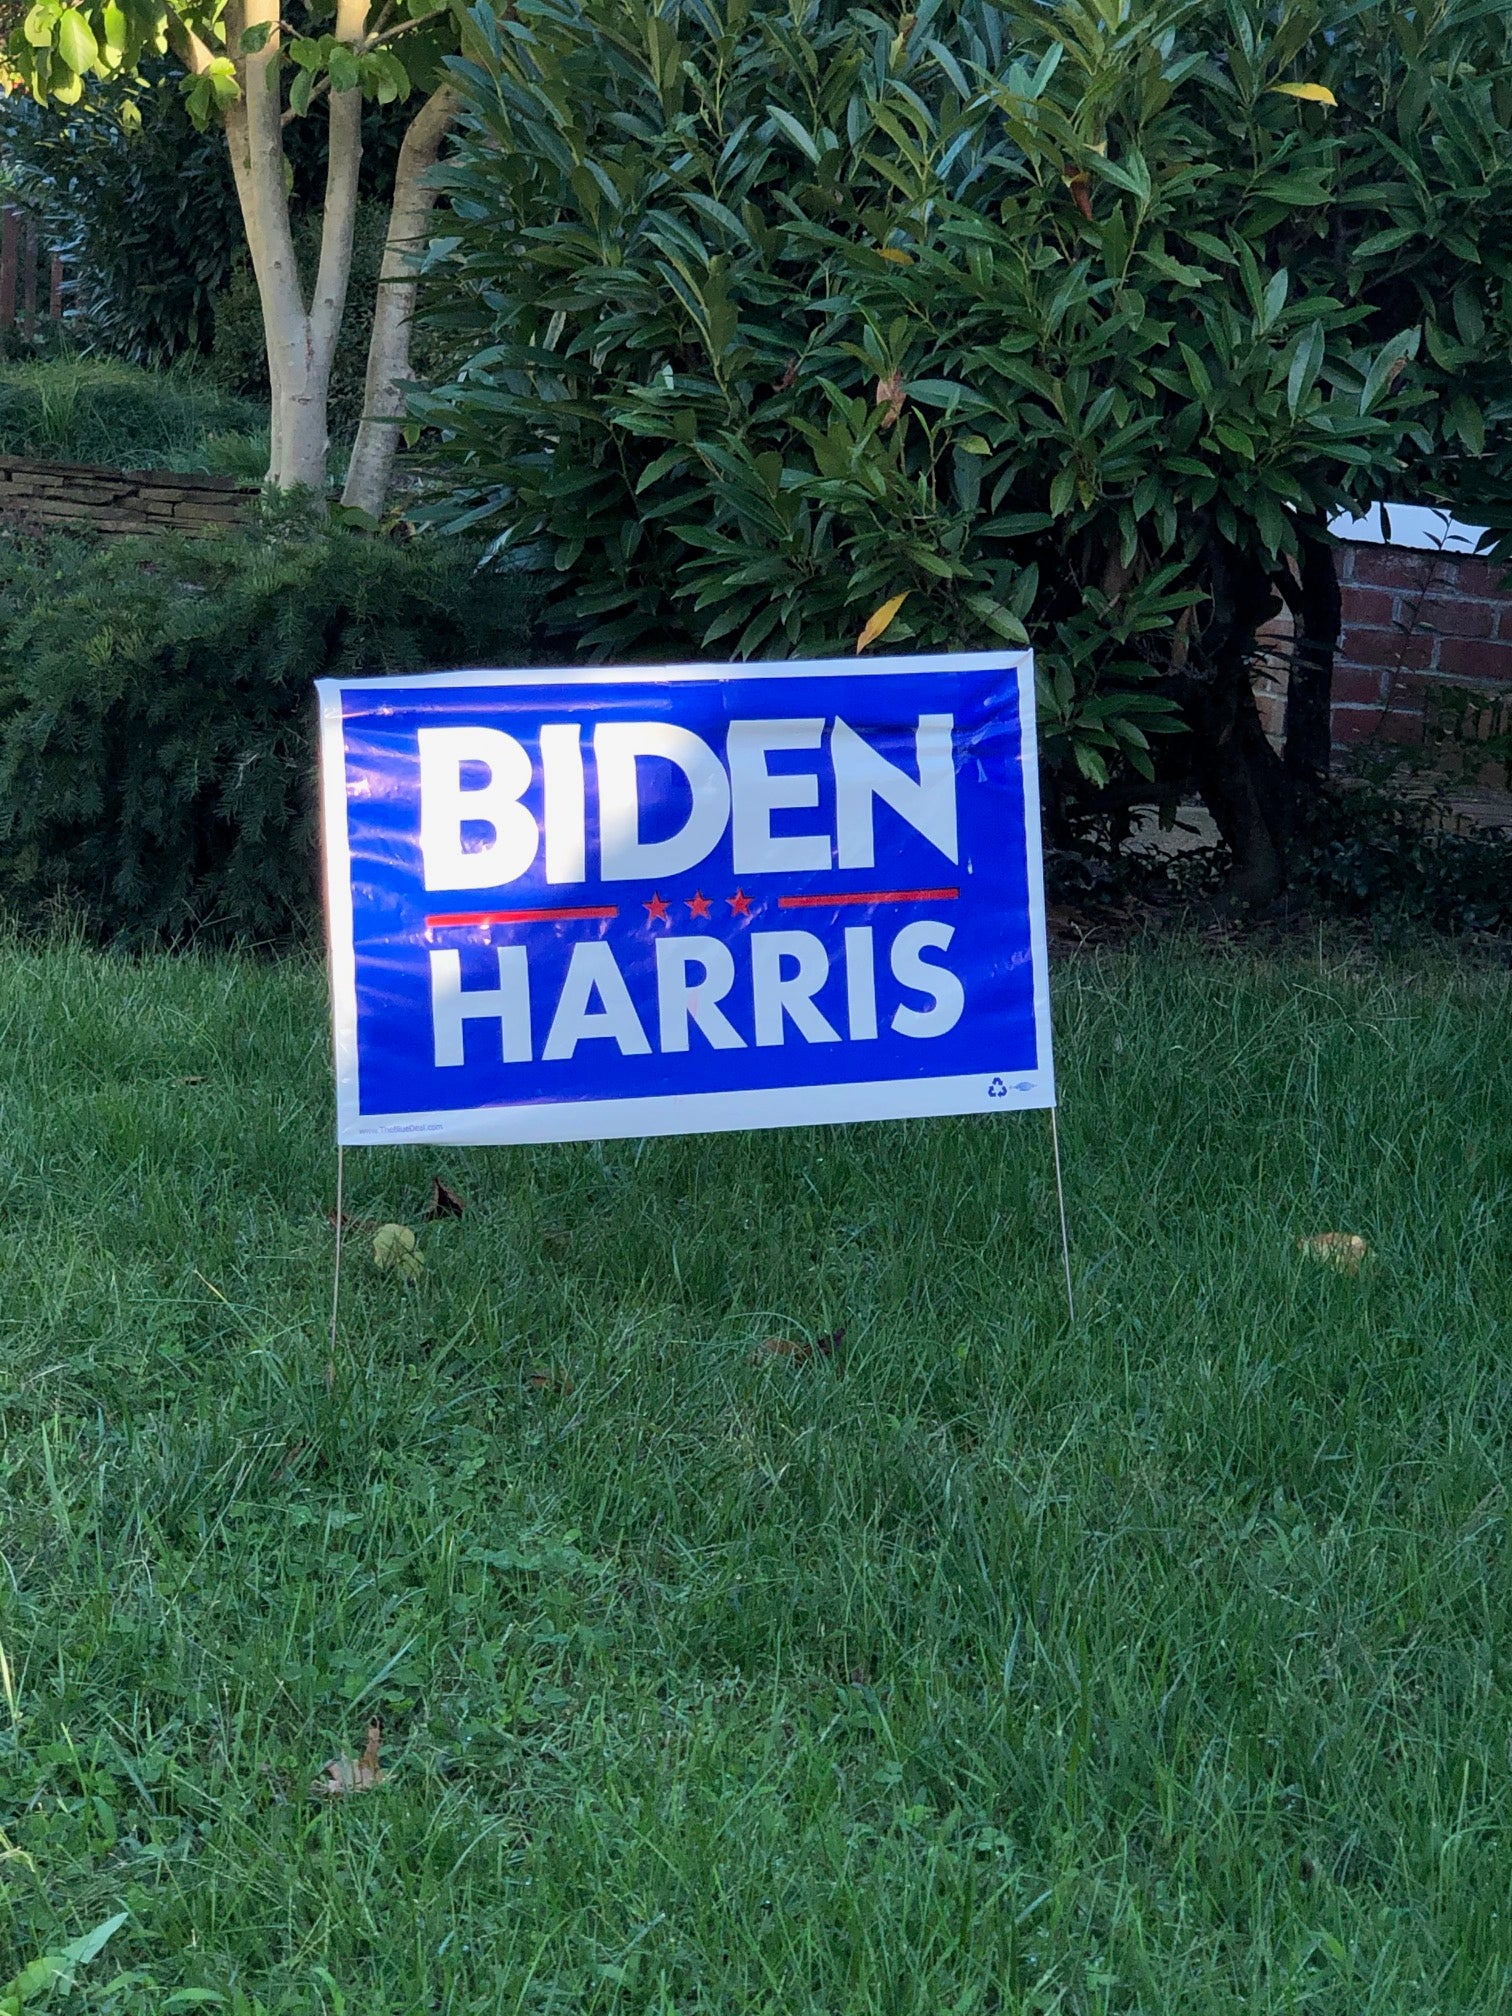 Biden Harris yard sign displayed in yard